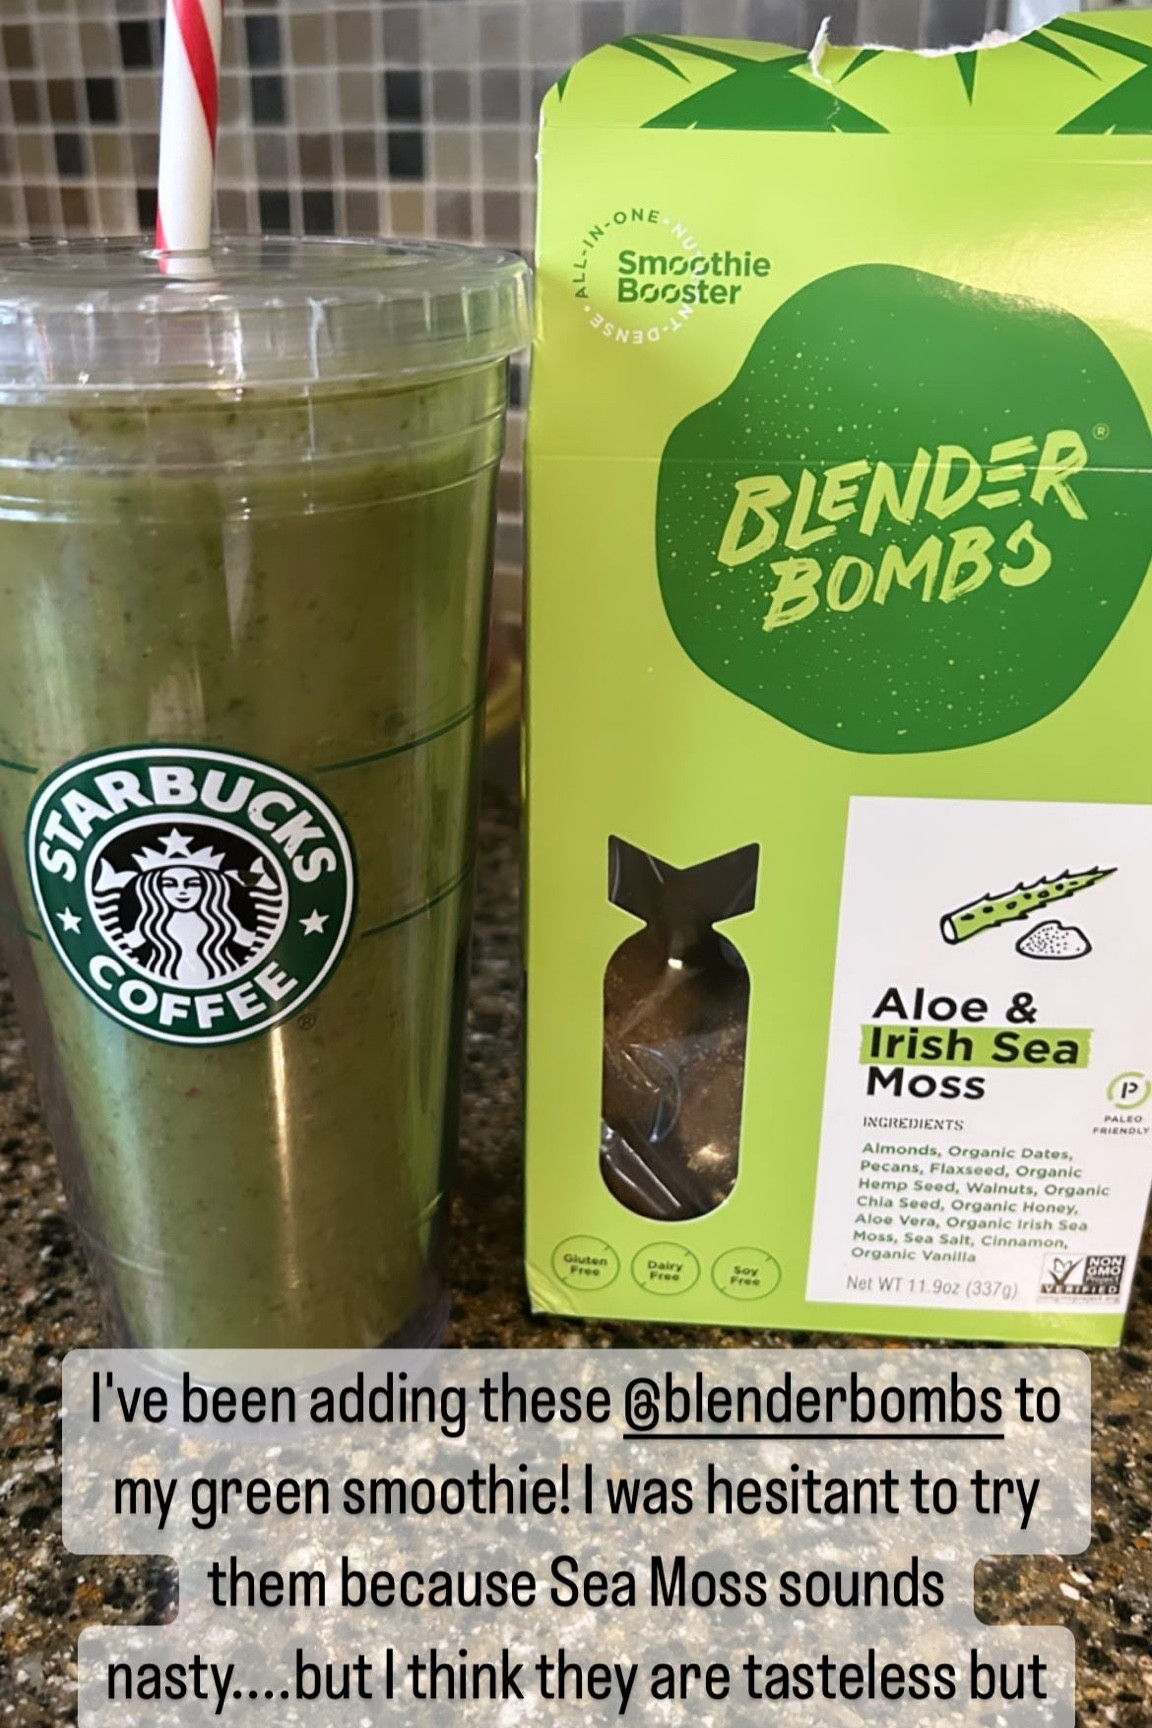 Blender Bombs Smoothie Booster: Aloe & Irish Sea Moss